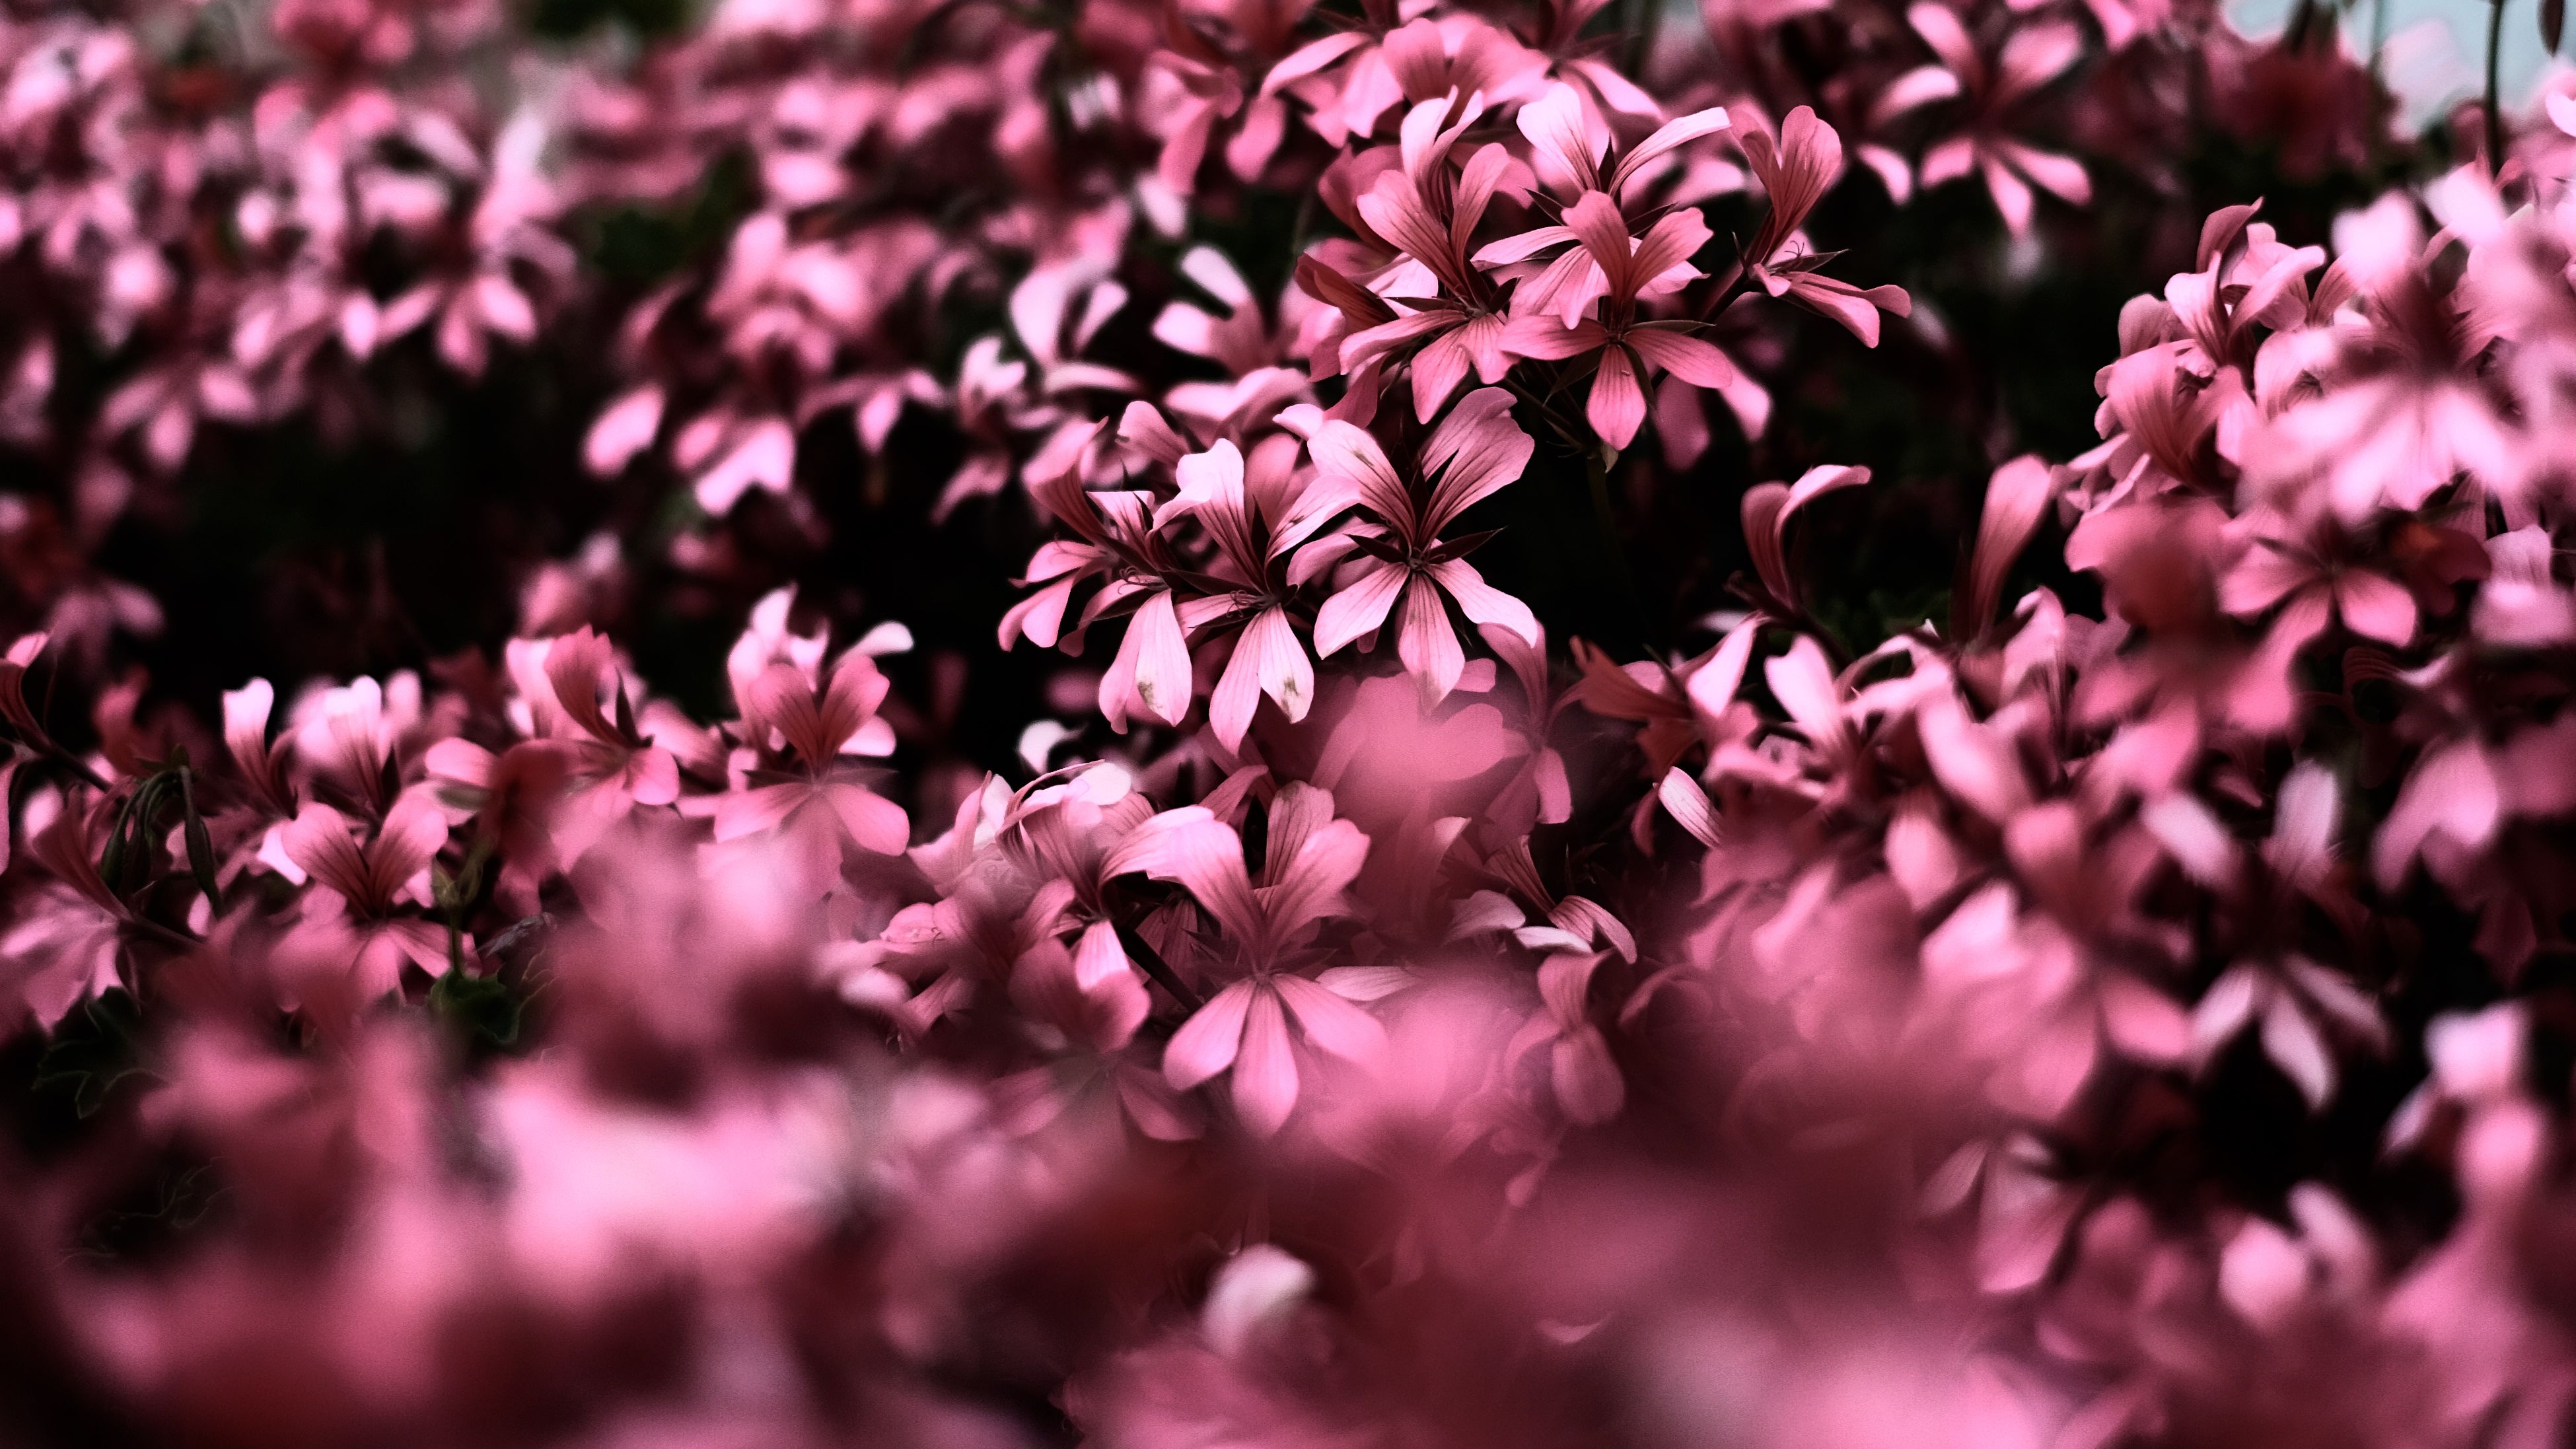 Pink Flowers Ultra Hd Blur 4k, HD Flowers, 4k Wallpapers, Images